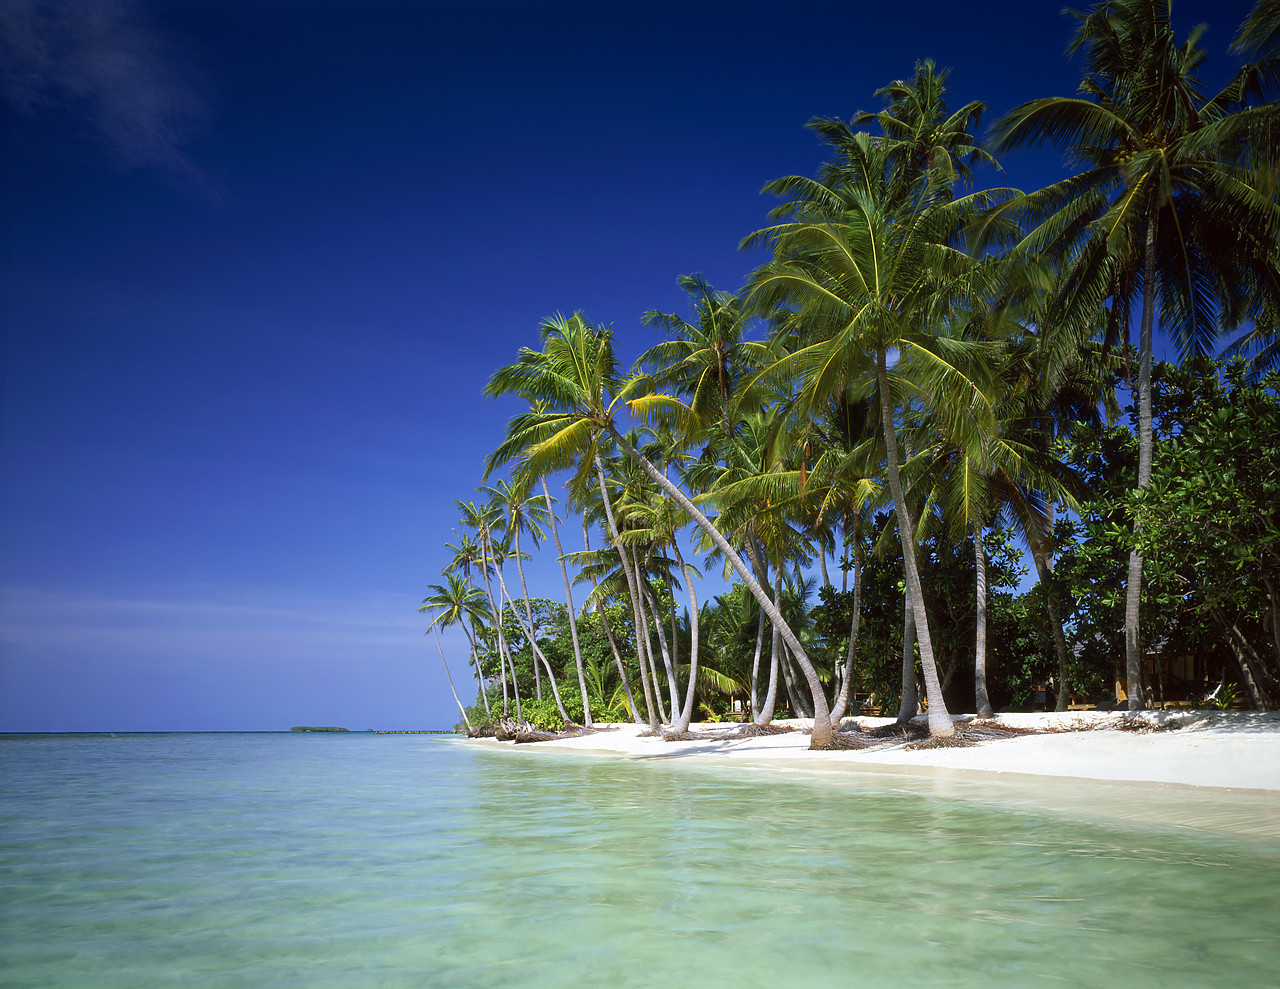 #080045-1 - Deserted Palm Fringed Beach, Kuredu, Maldives